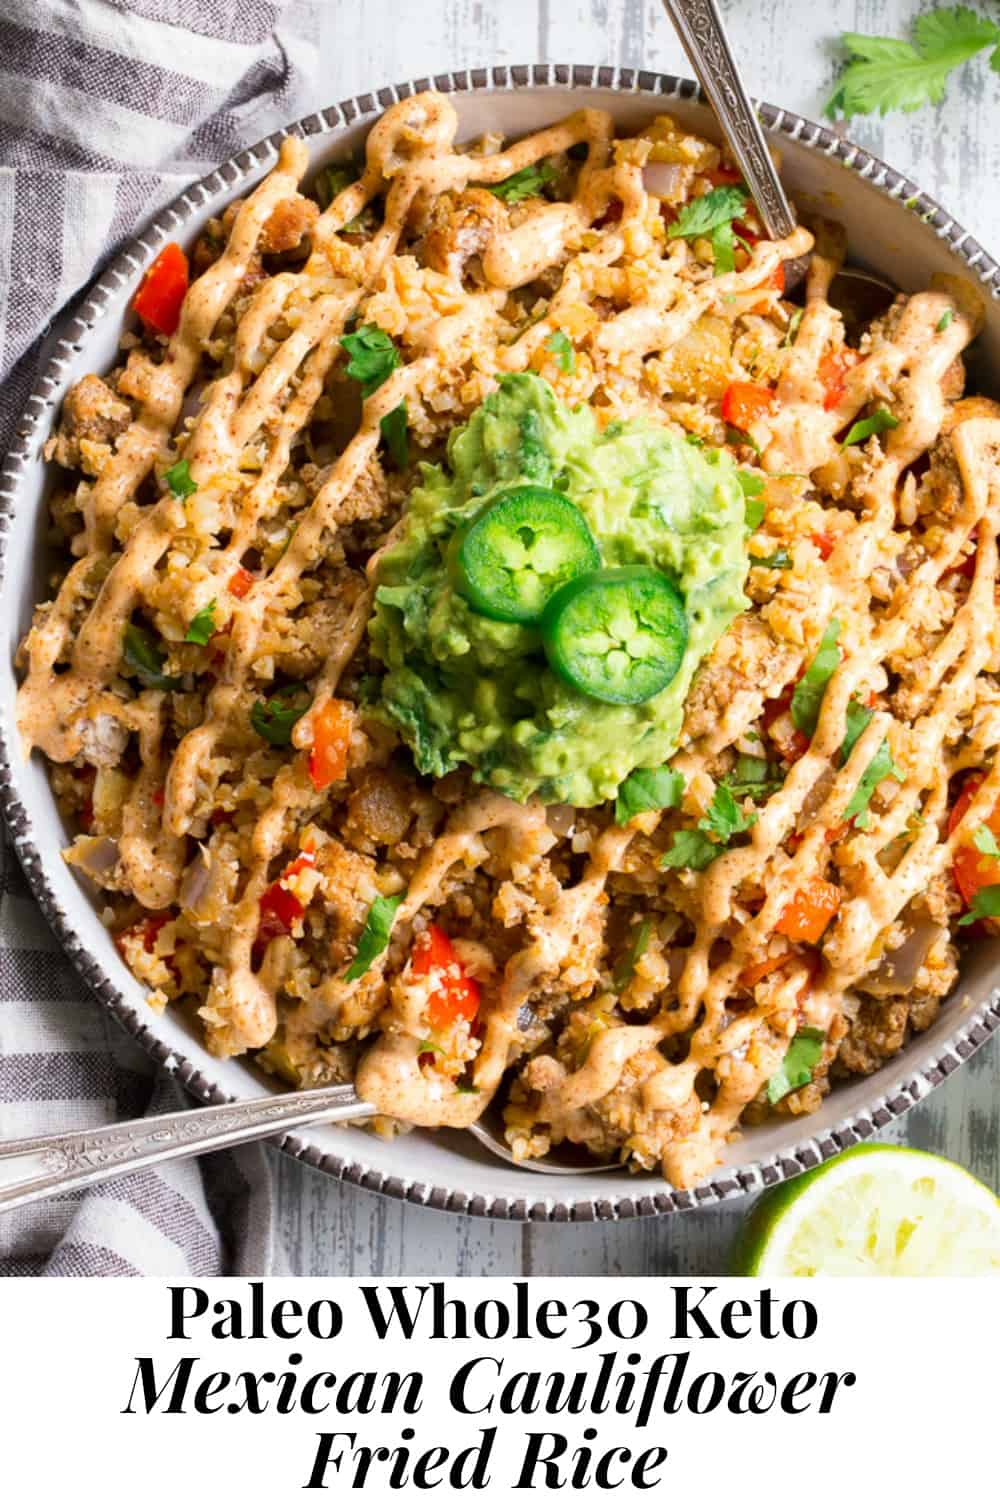 https://www.paleorunningmomma.com/wp-content/uploads/2018/05/mexican-cauliflower-fried-rice-paleo.jpg